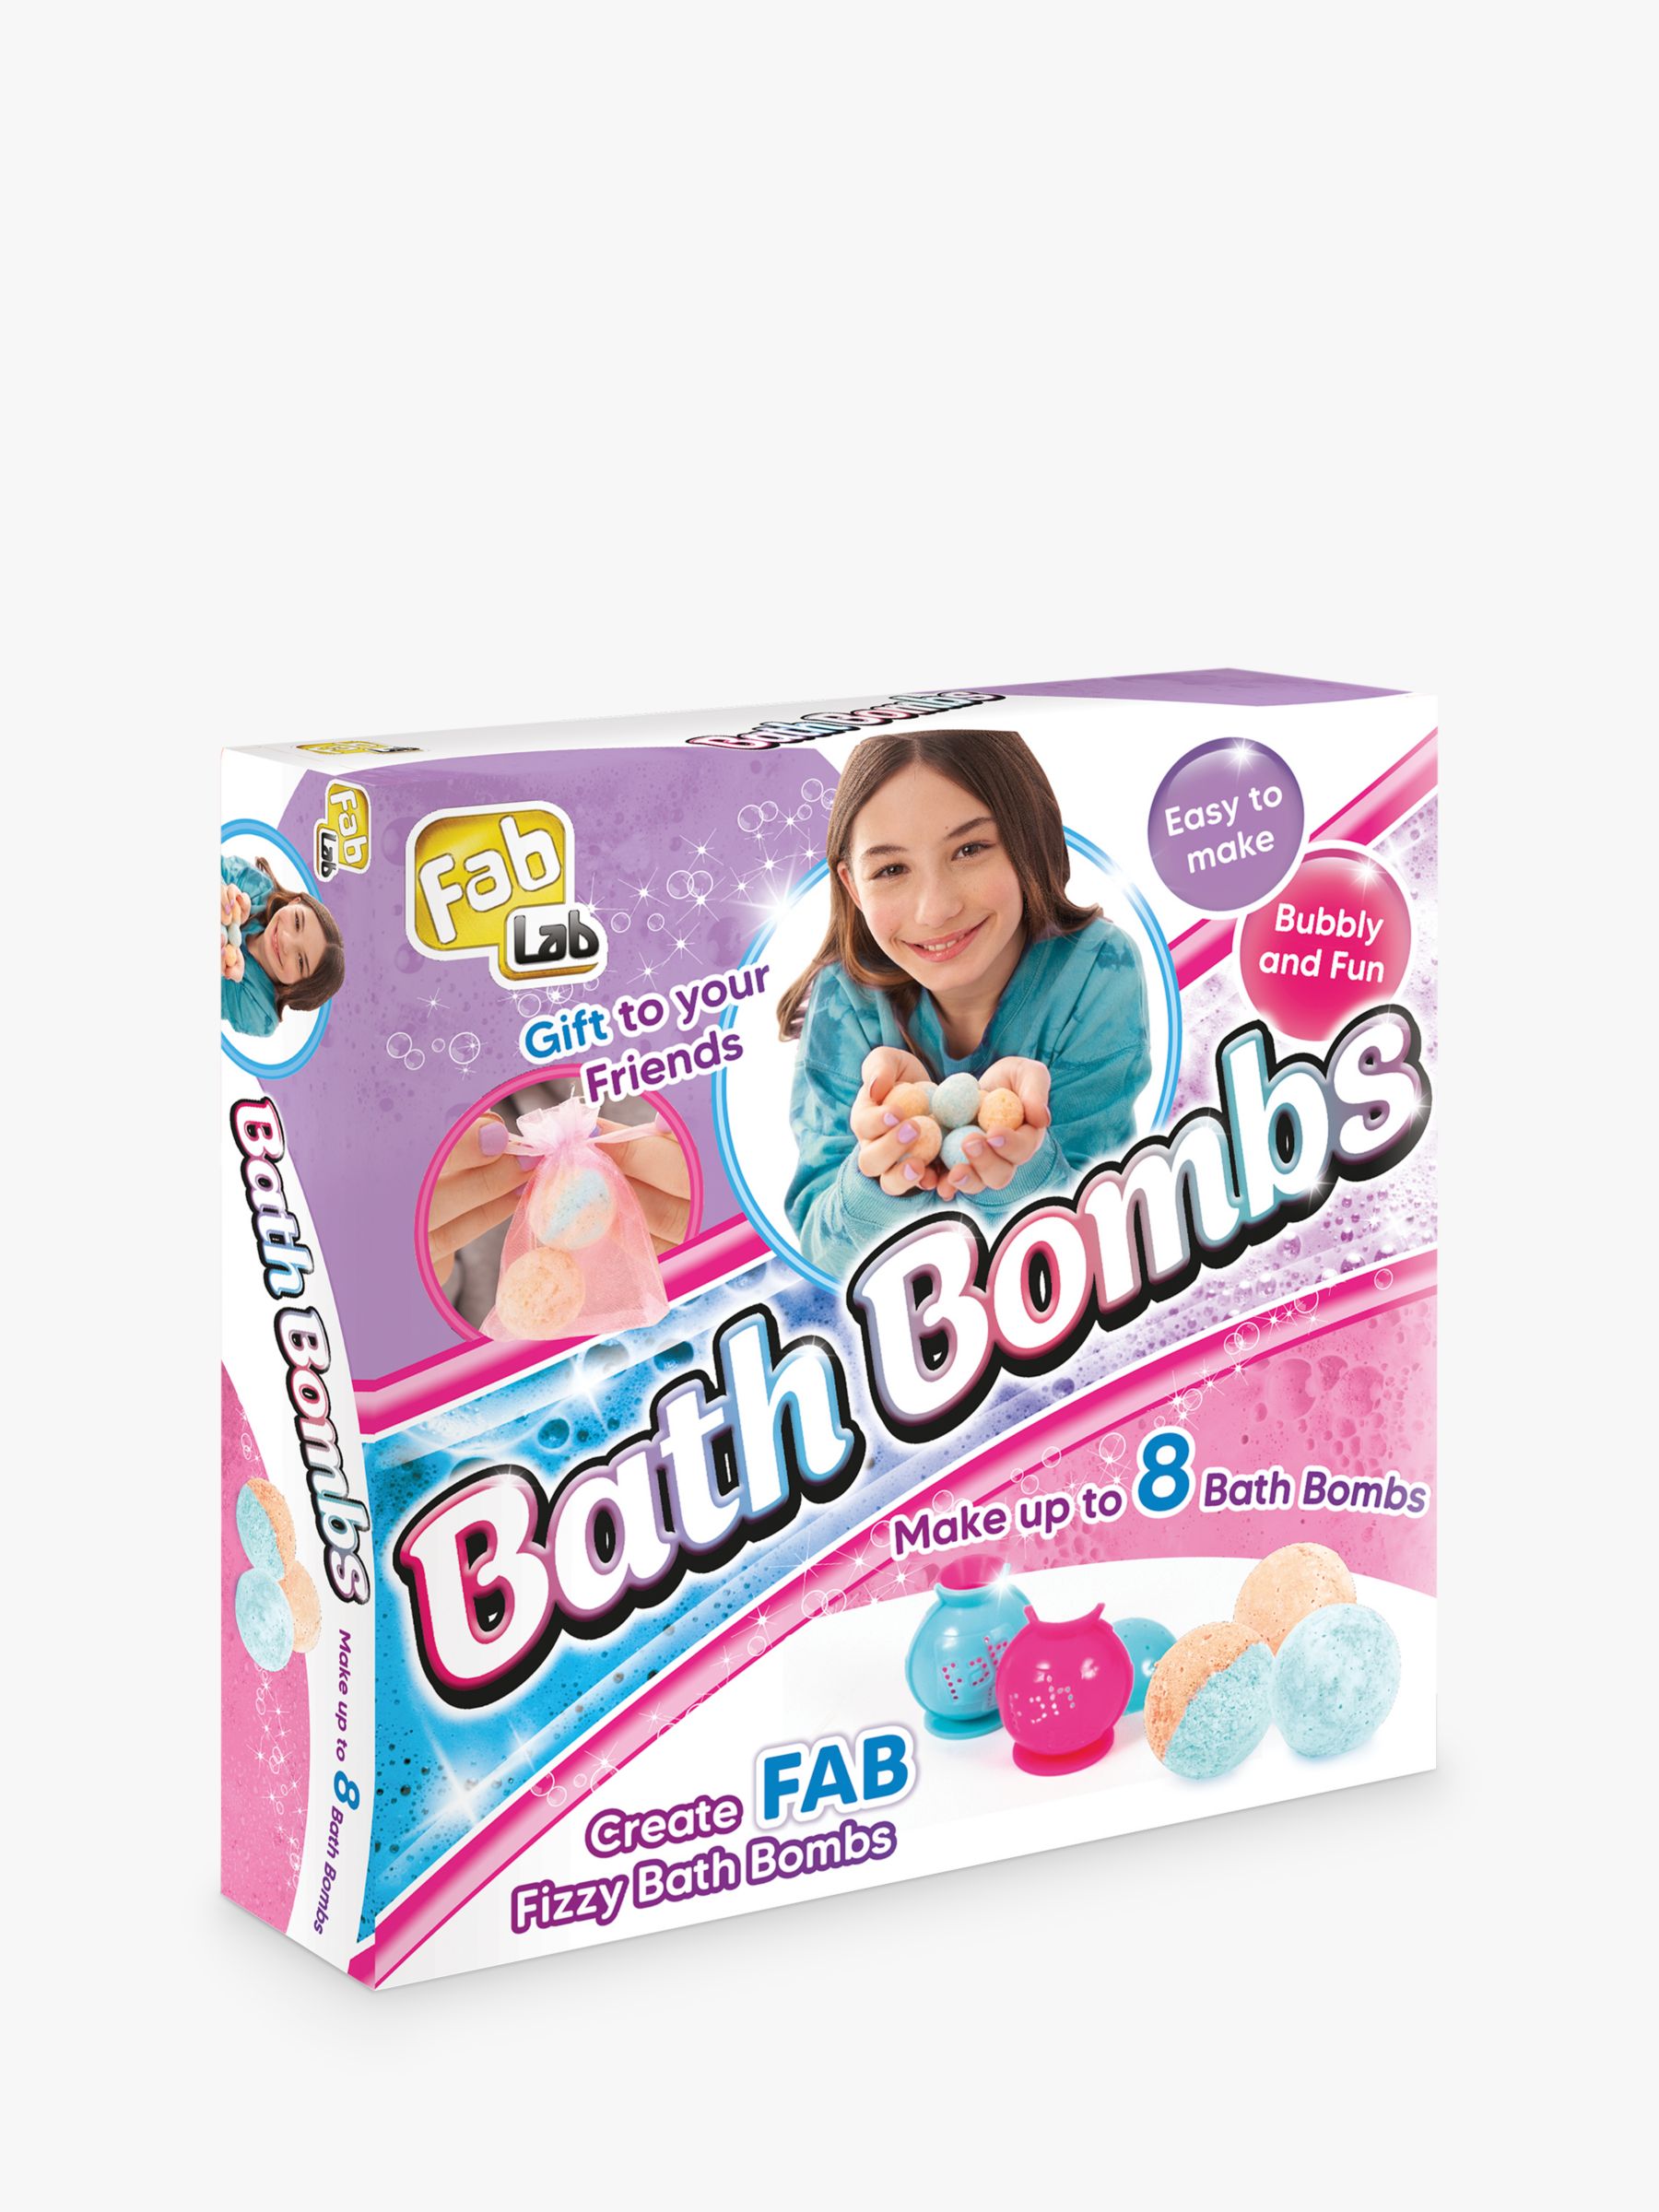 make your own bath bomb